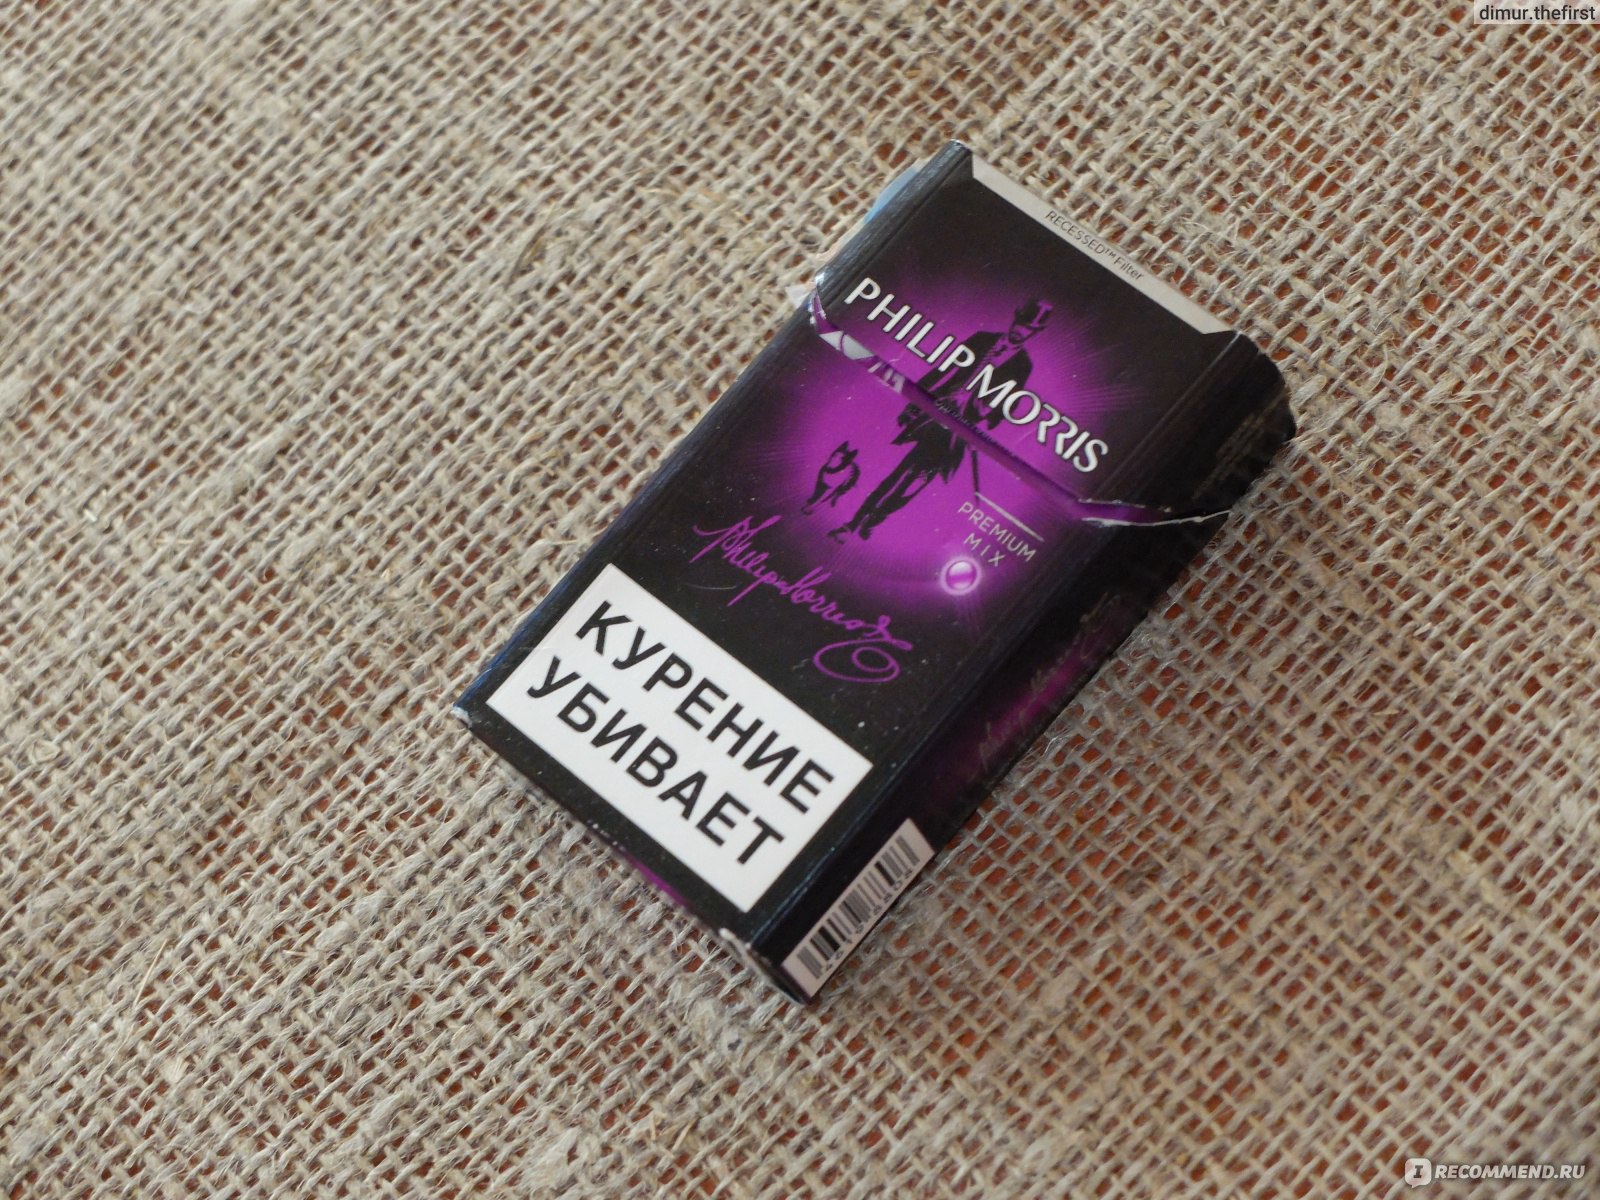 Филип моррис с кнопкой вкусы. Сигареты Филип Моррис с кнопкой фиолетовой. Сигареты Philip Morris с фиолетовой кнопкой.